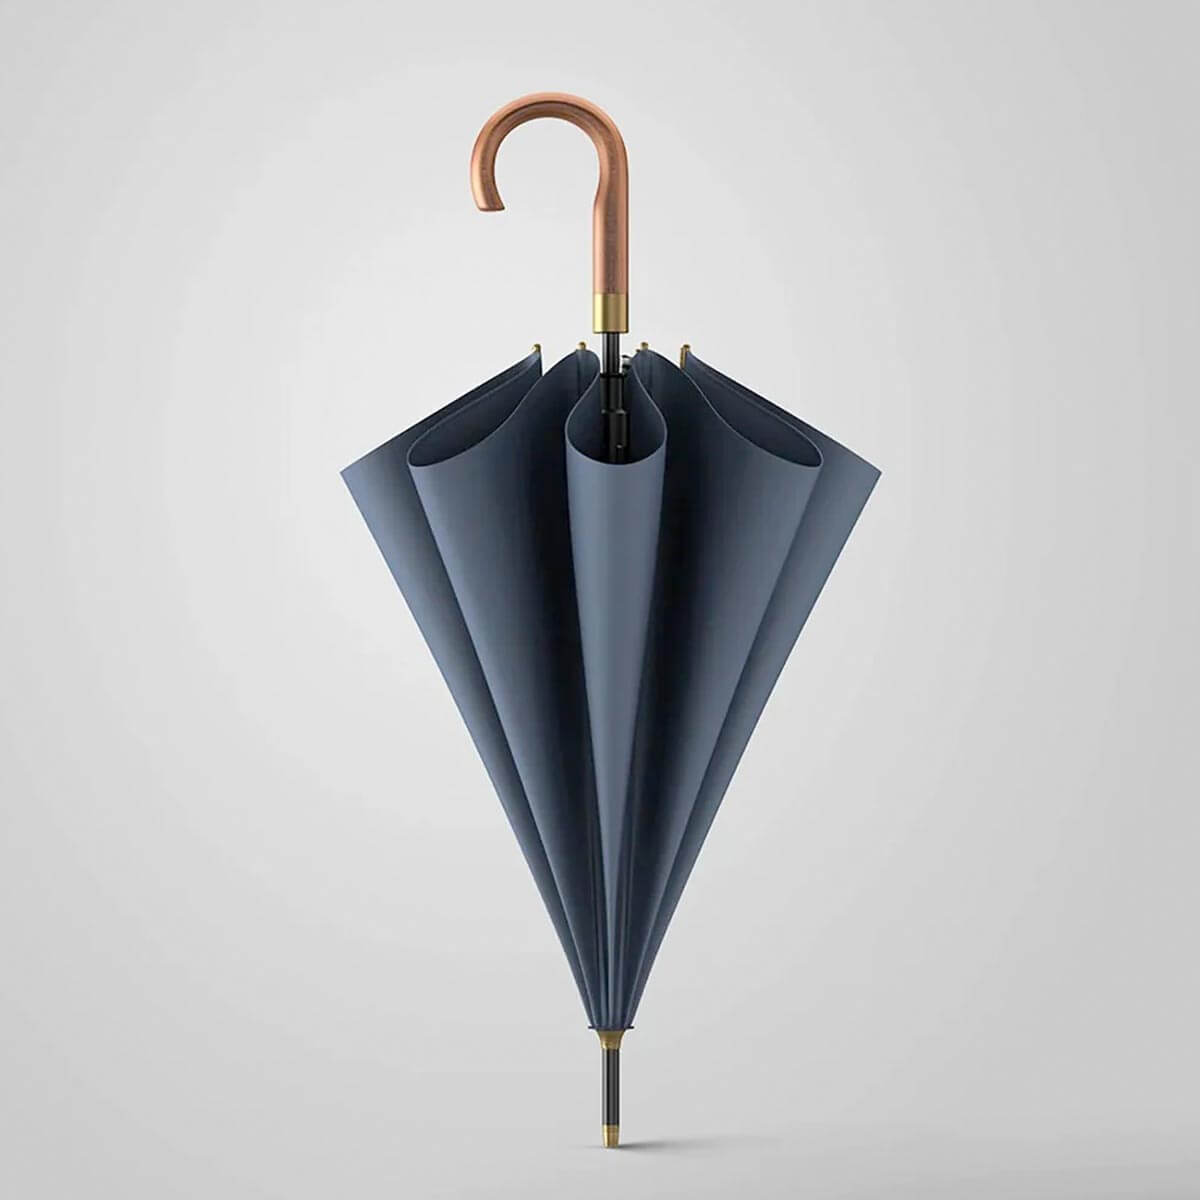 Designer rain umbrella with waterproof canopy